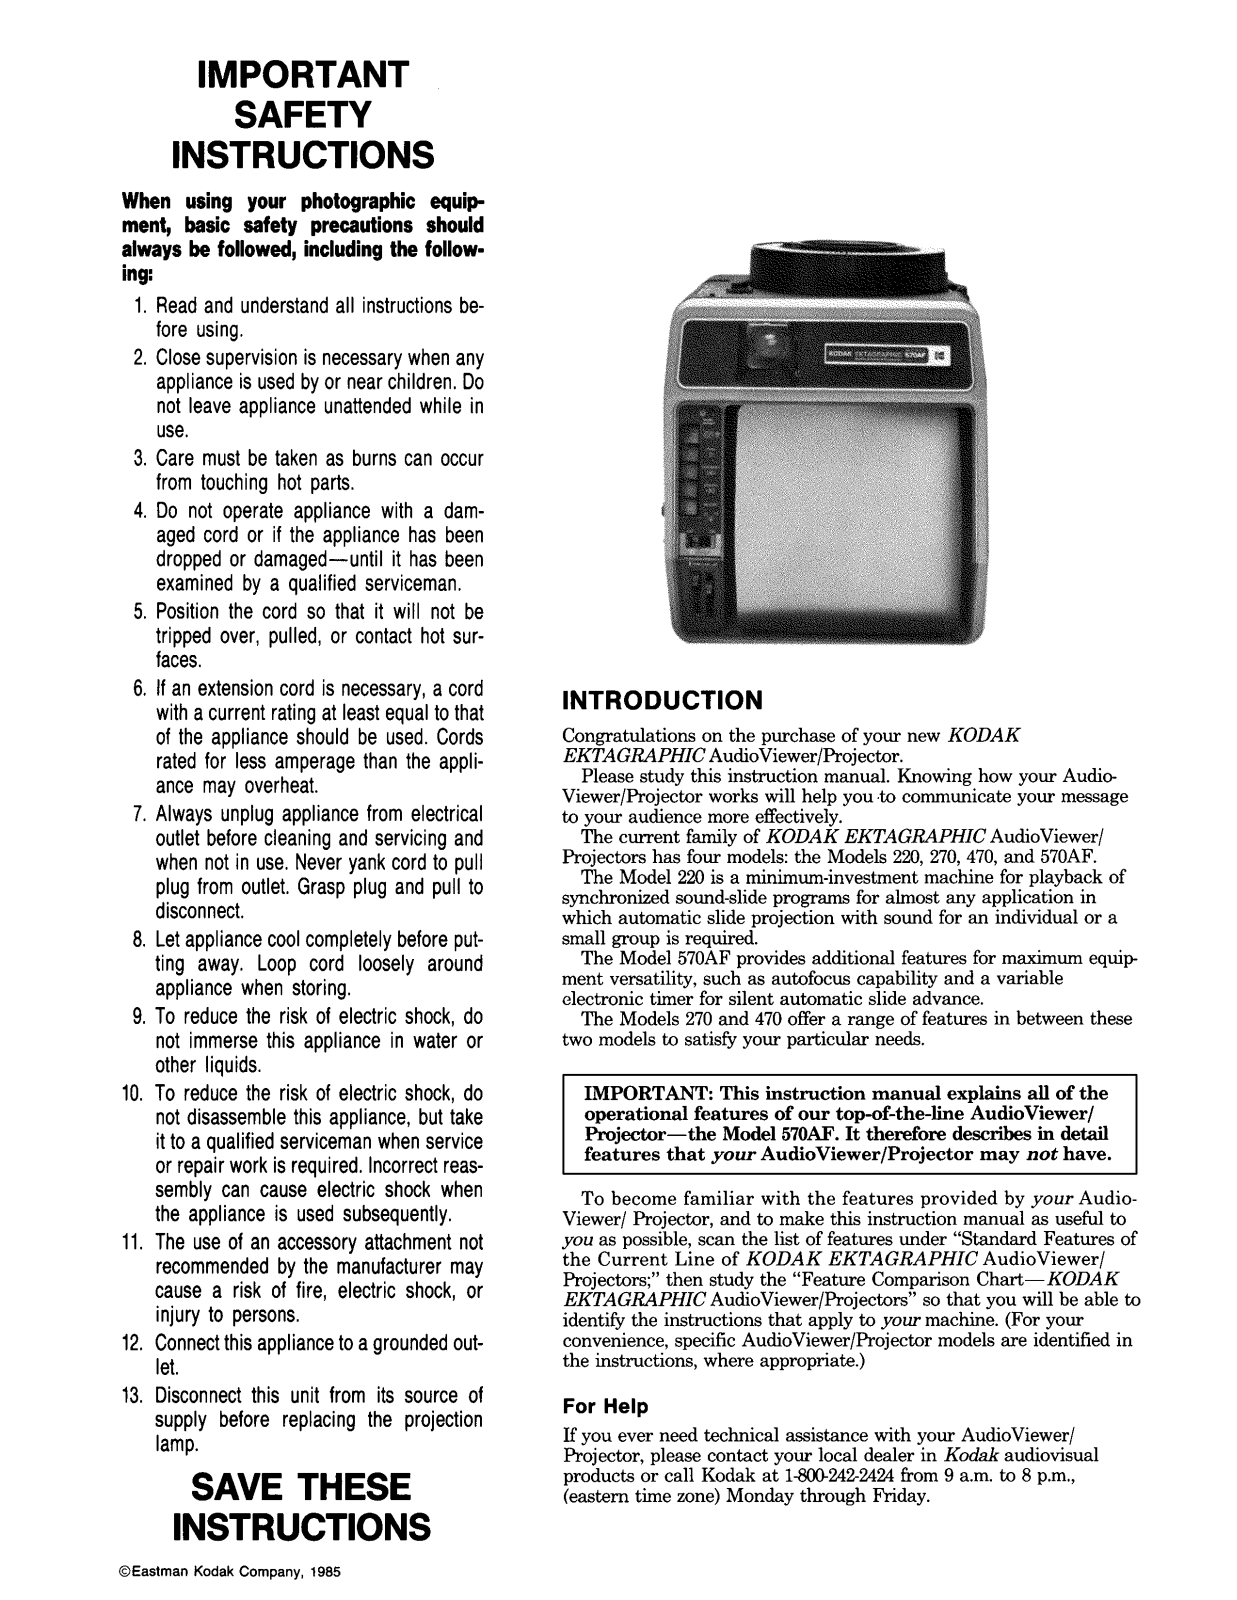 Kodak 570AF, 220, 270 User Manual